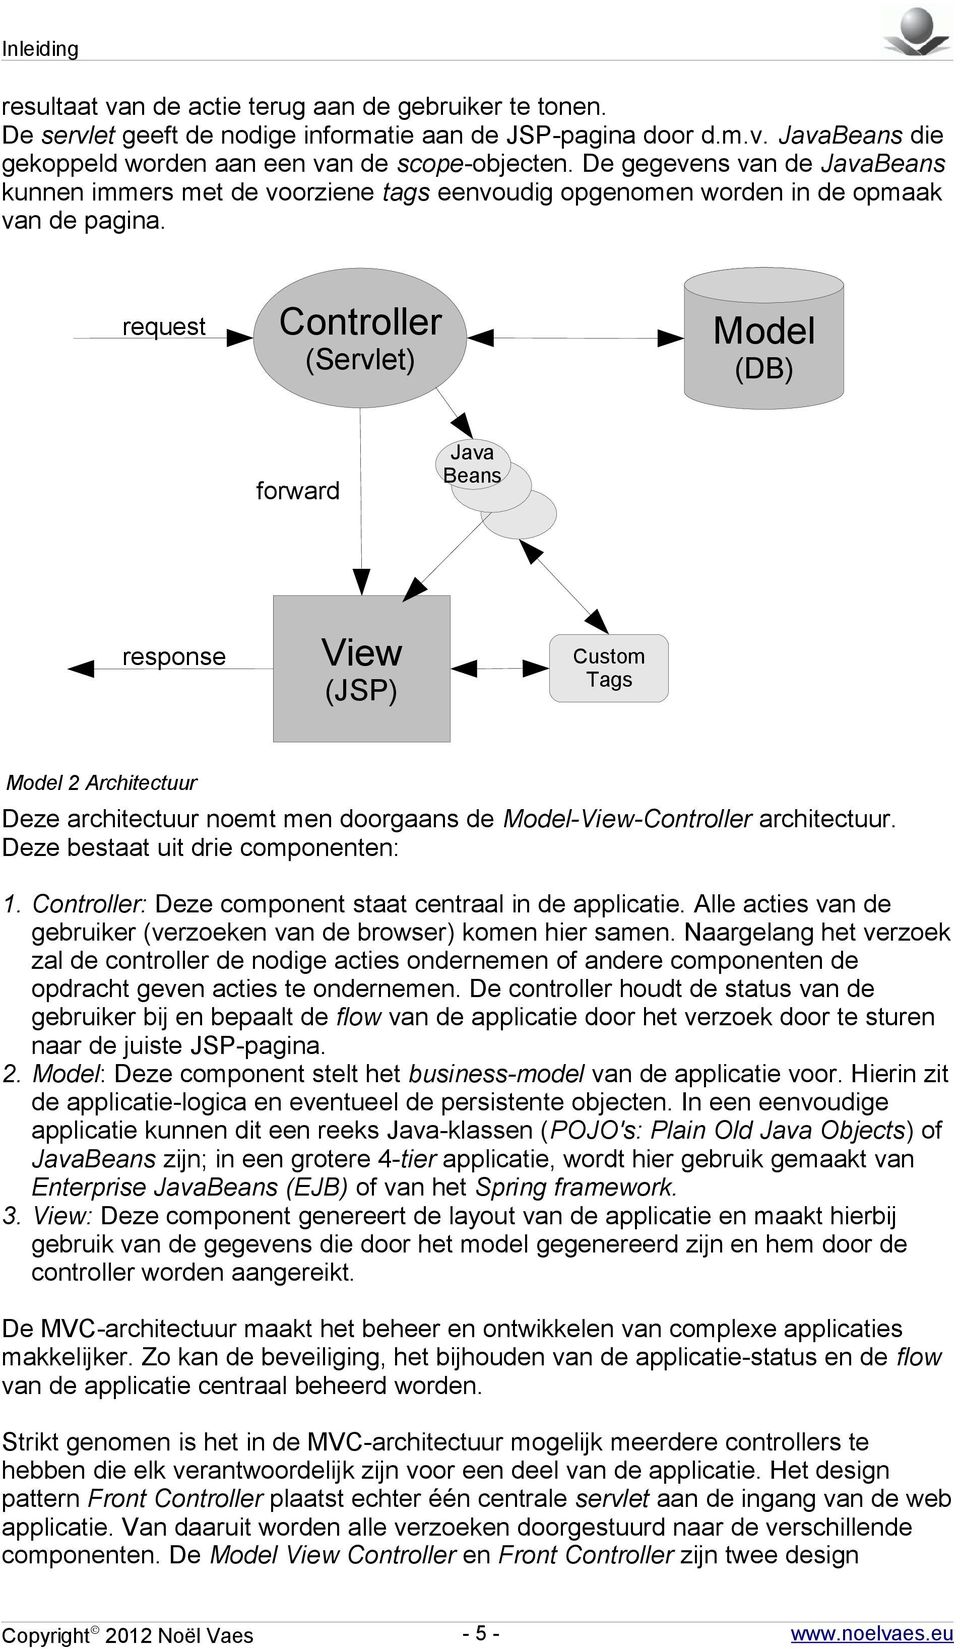 request Controller (Servlet) Model (DB) forward Java Beans response View (JSP) Custom Tags Model 2 Architectuur Deze architectuur noemt men doorgaans de Model-View-Controller architectuur.